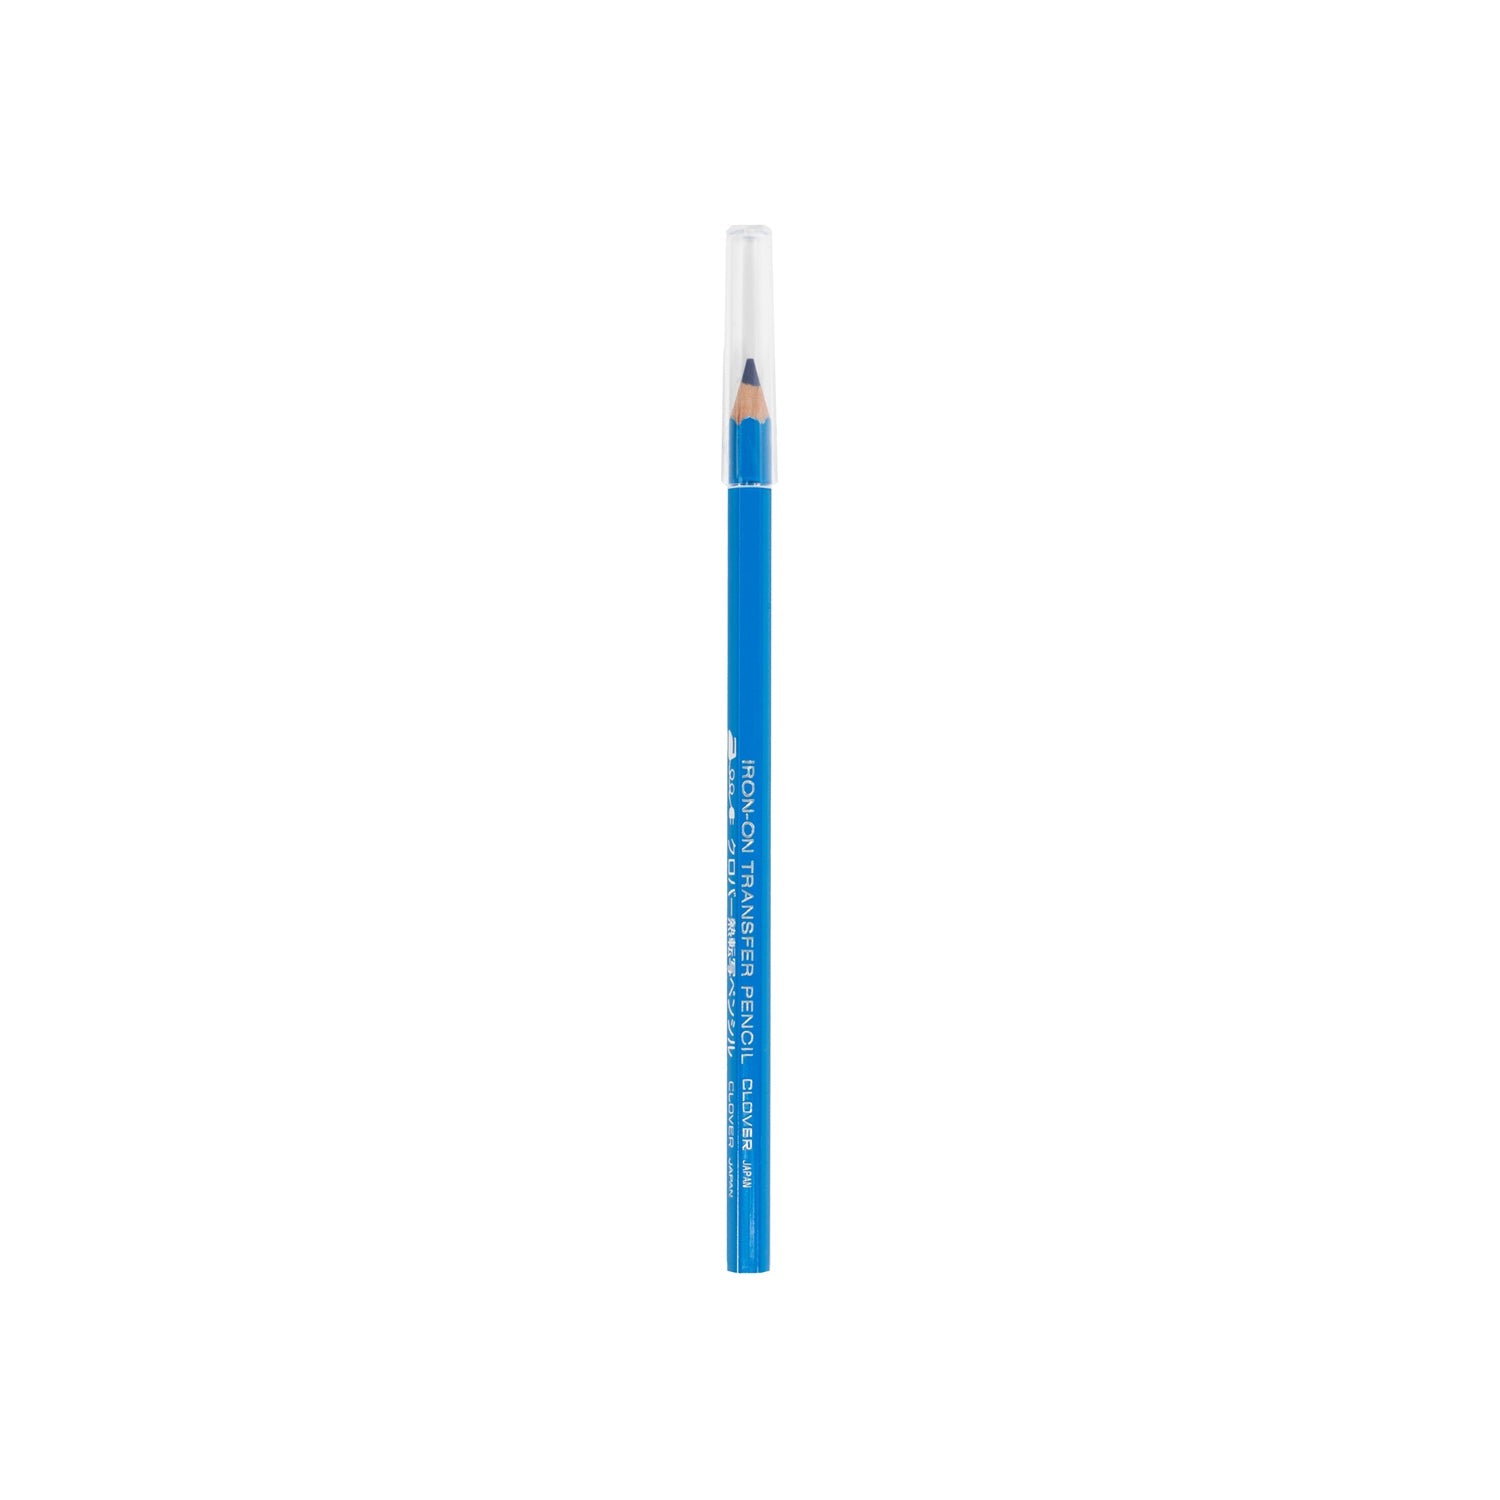 CLV - Iron-On Transfer Pencil (Blue) - 0